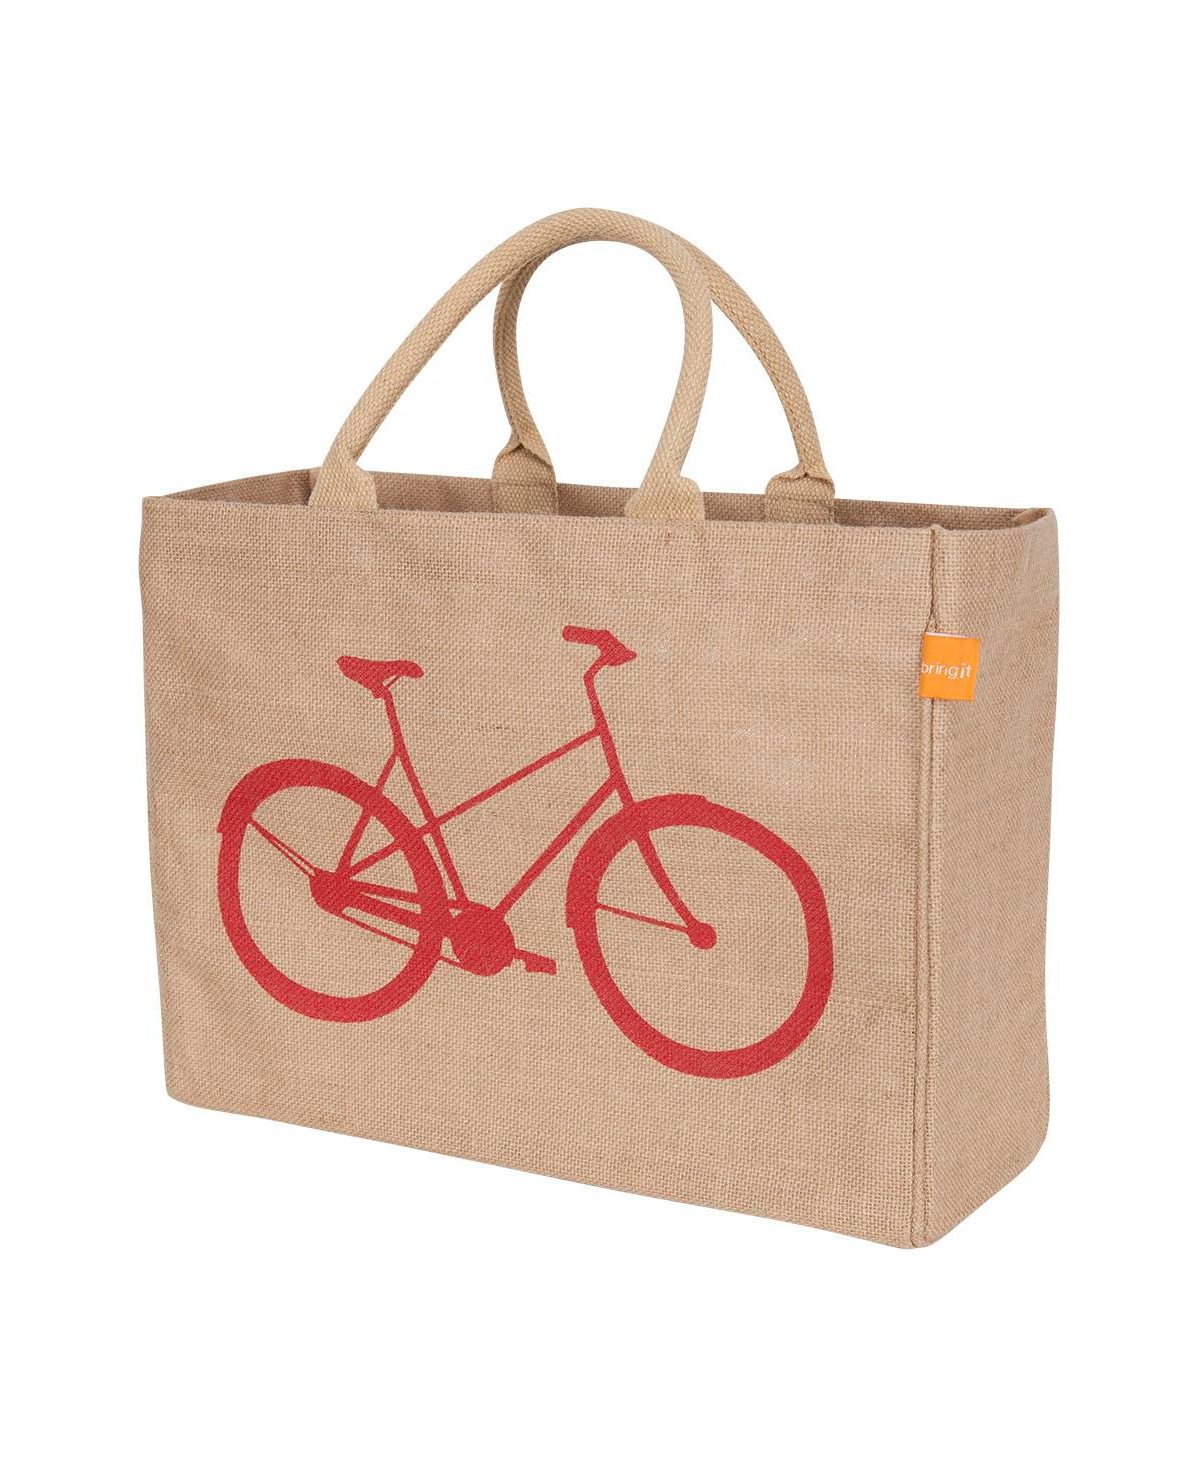 Kaf Home Jute Market Tote Bag With Bicycle Print In Beige